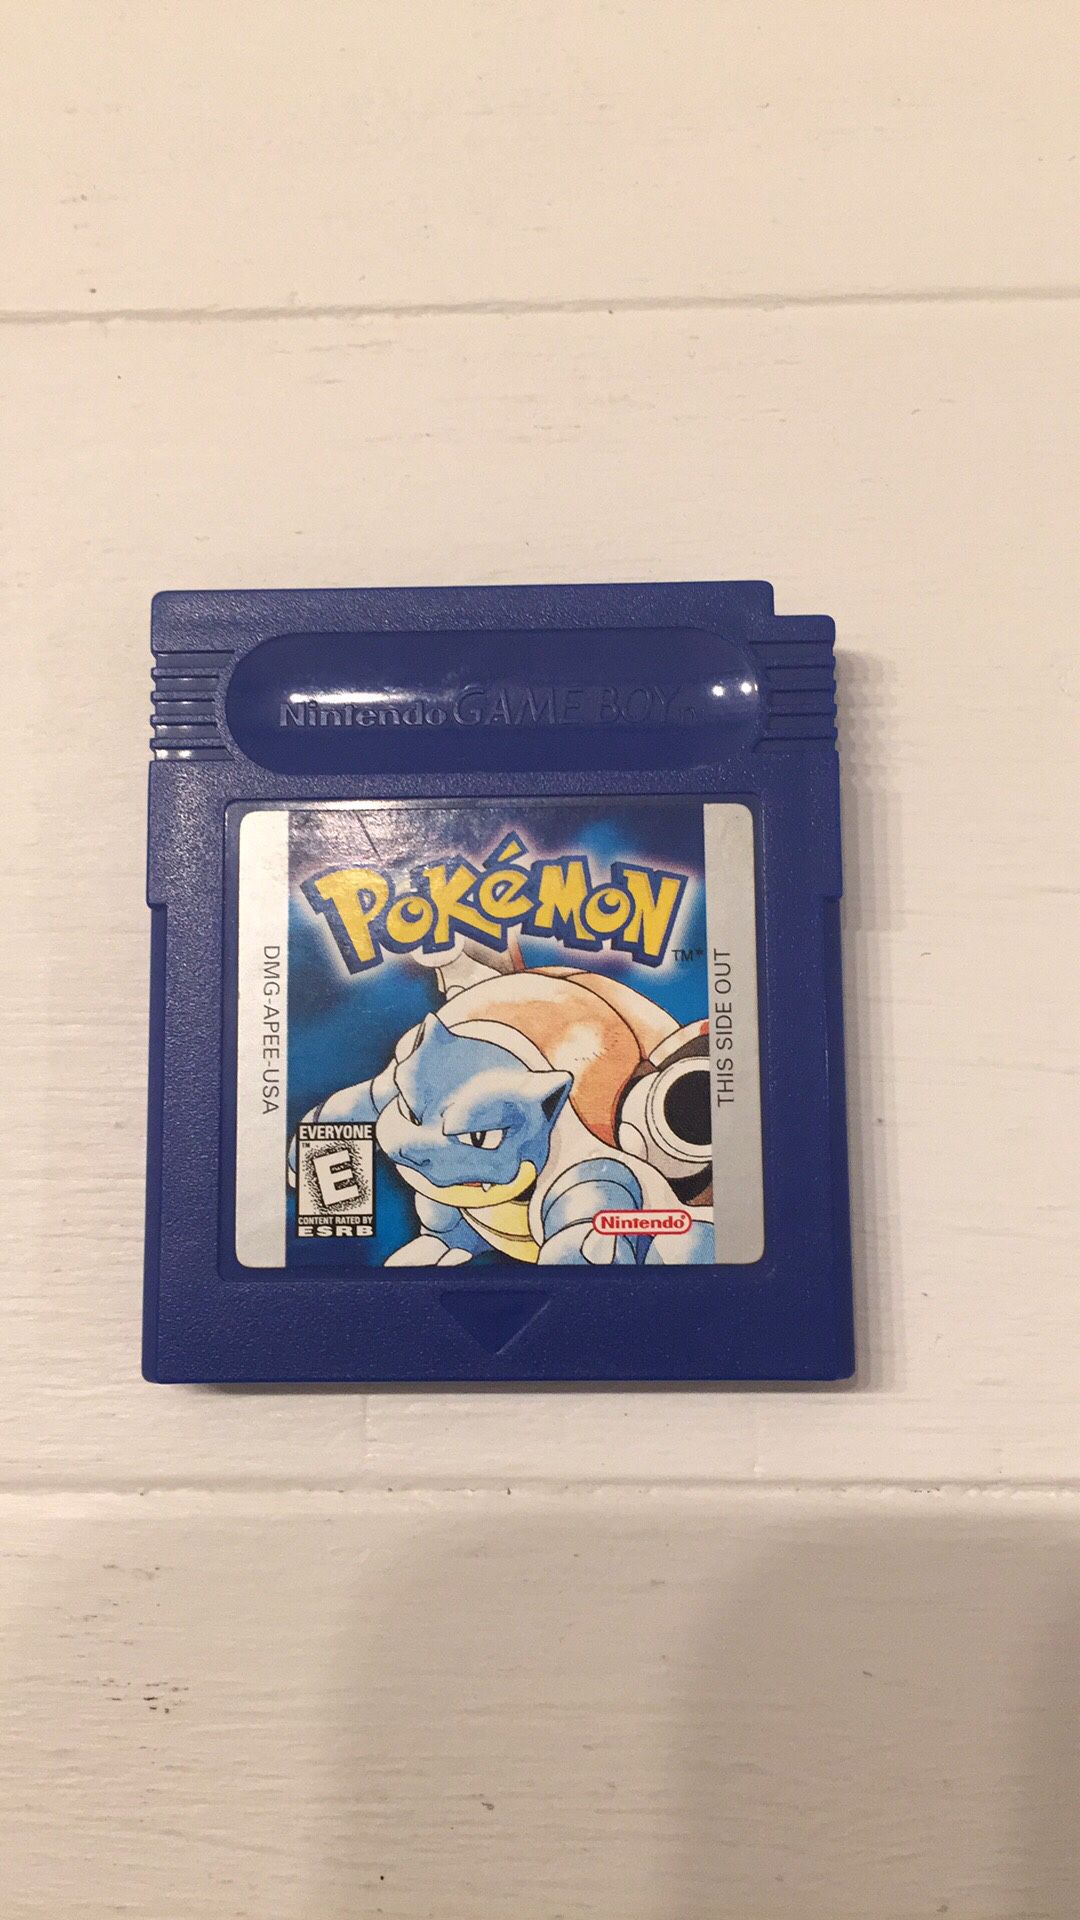 Pokémon Blue for Gameboy